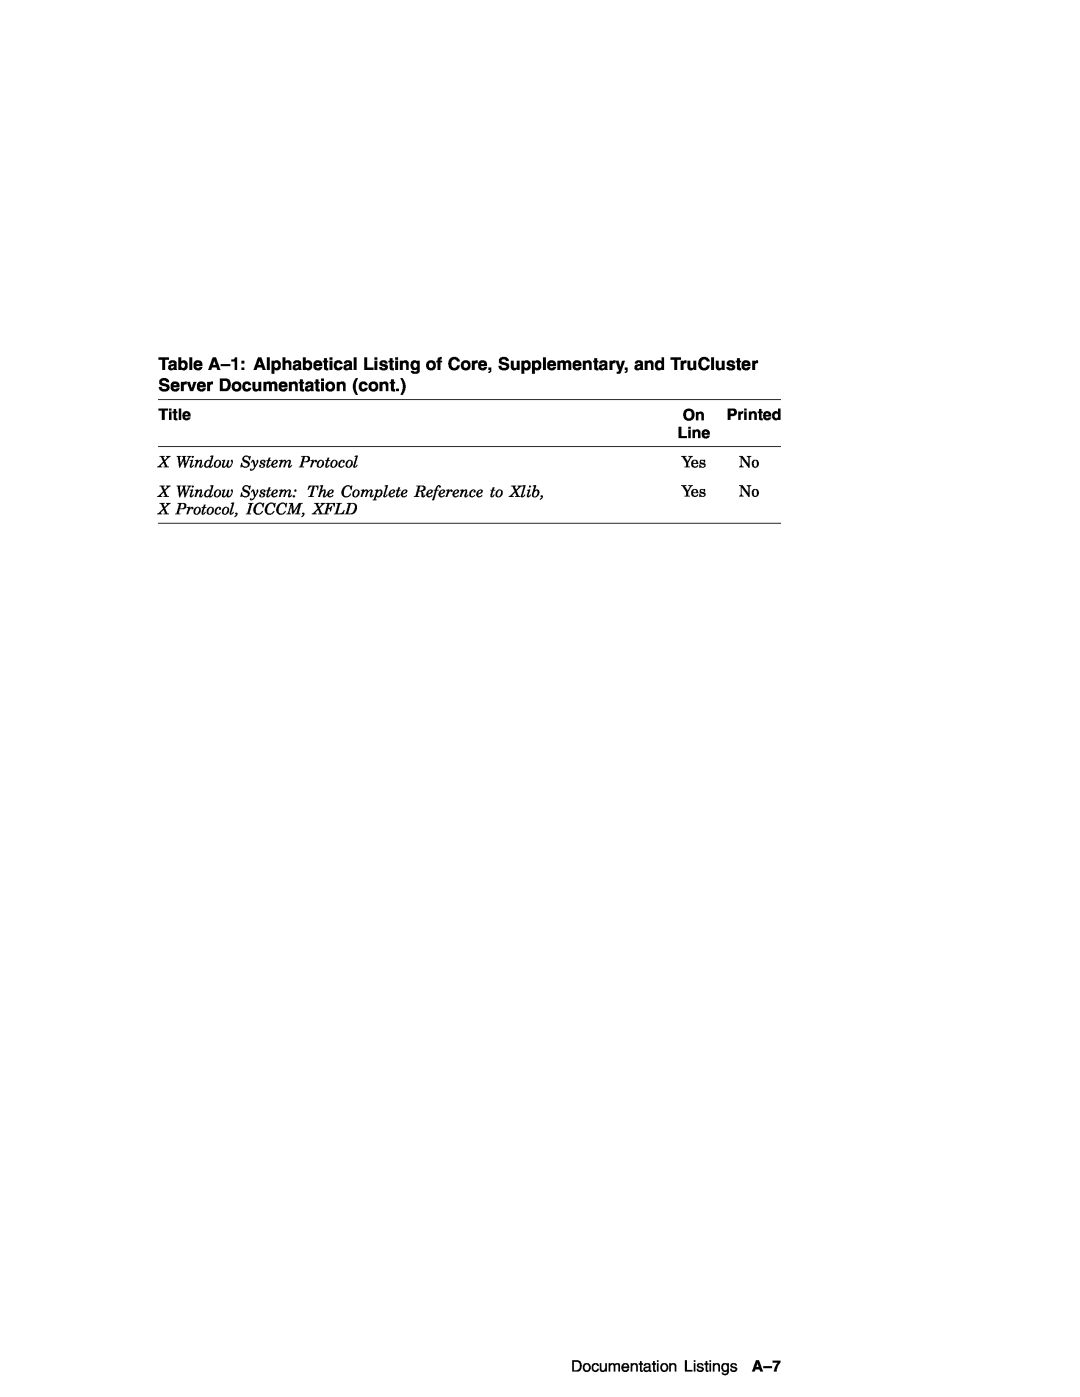 Compaq AA-RH8RD-TE manual Title, Printed, Line, Documentation Listings A-7 